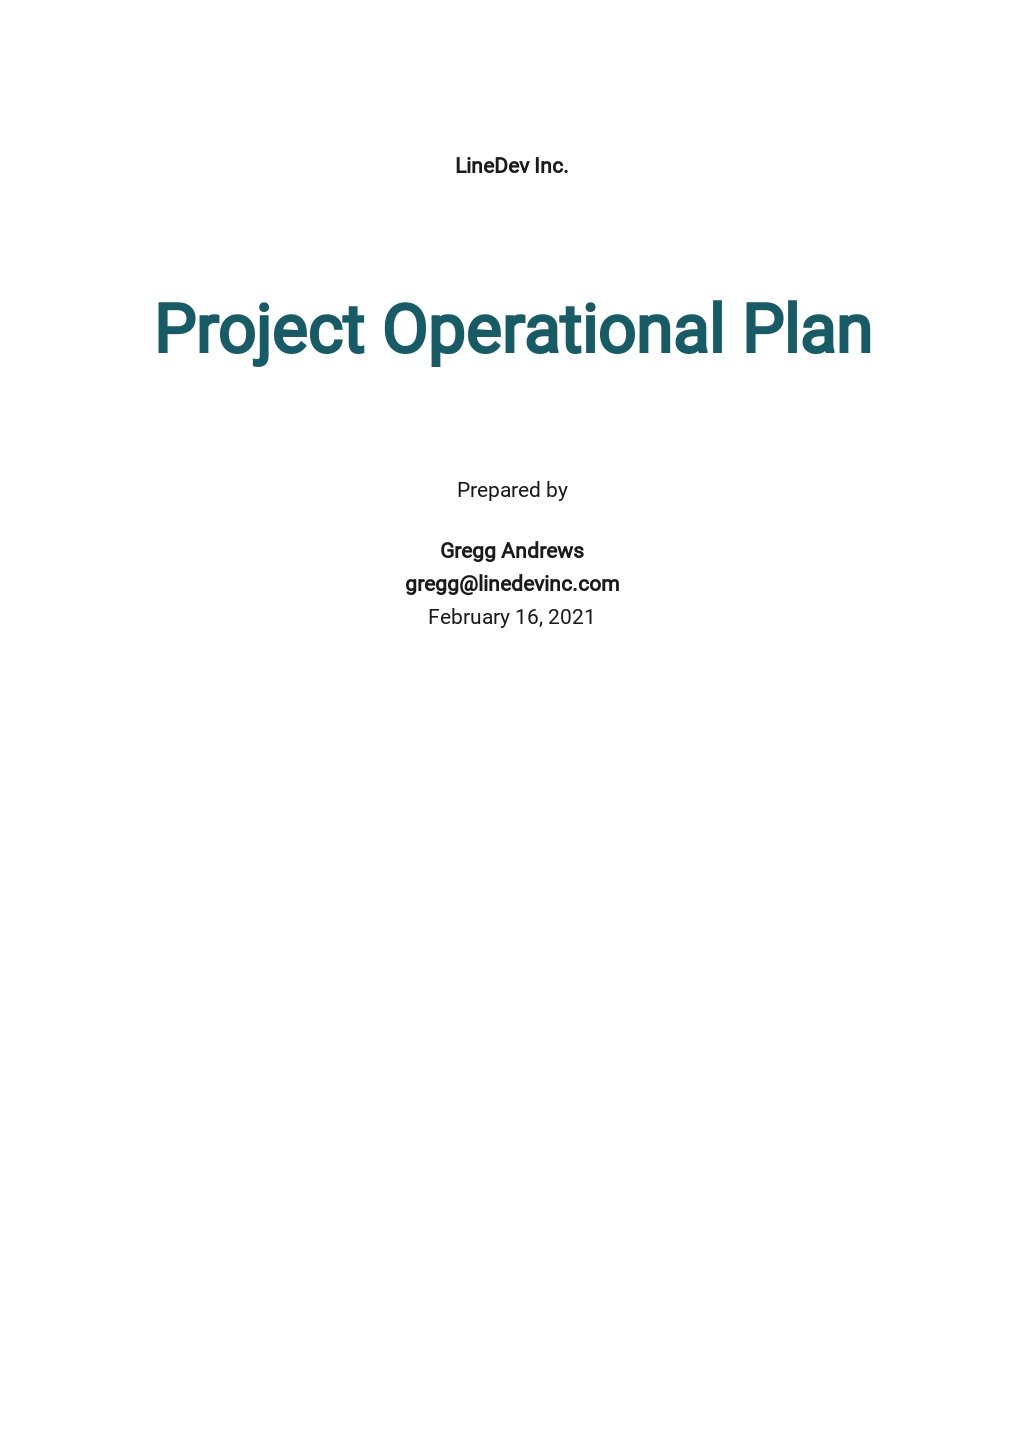 Project Operational Plan Template.jpe